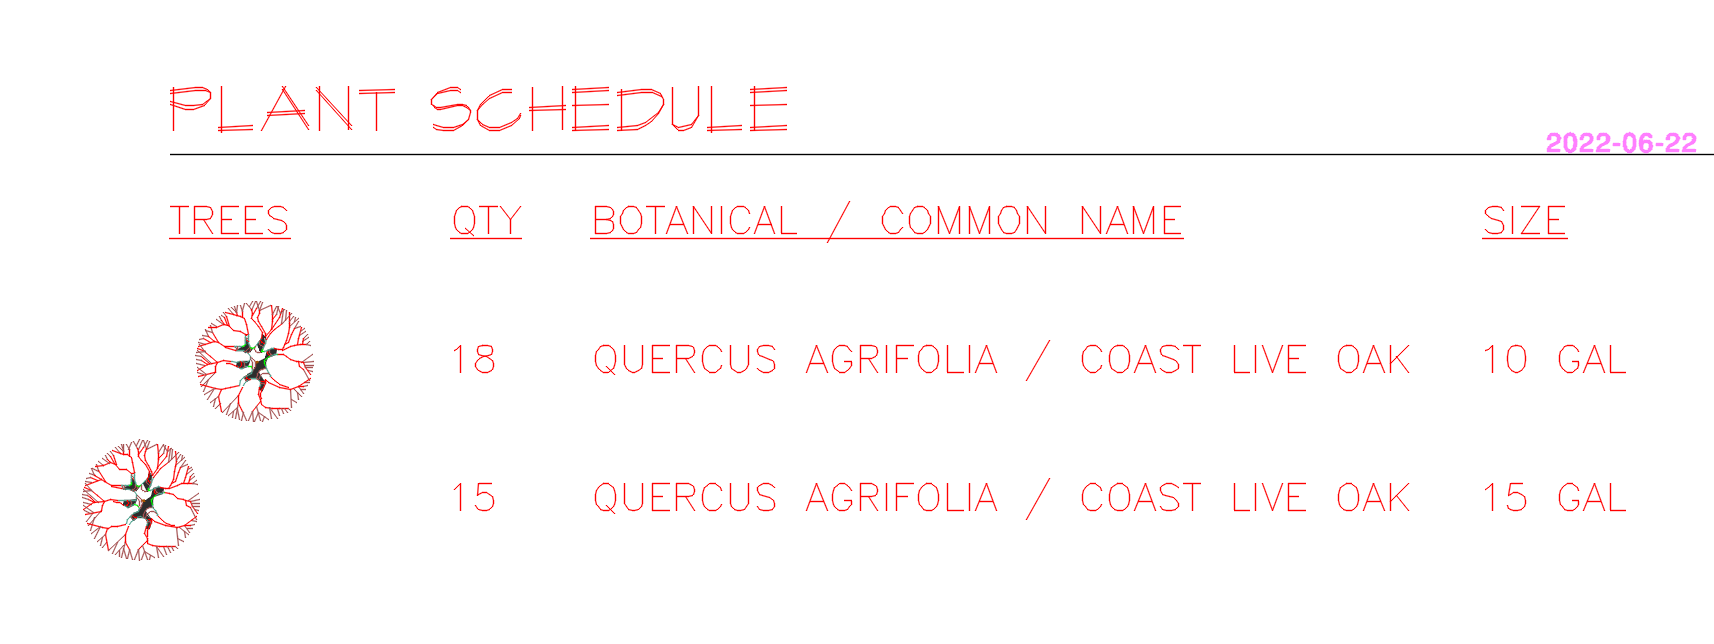 Plant Schedule showing both plants